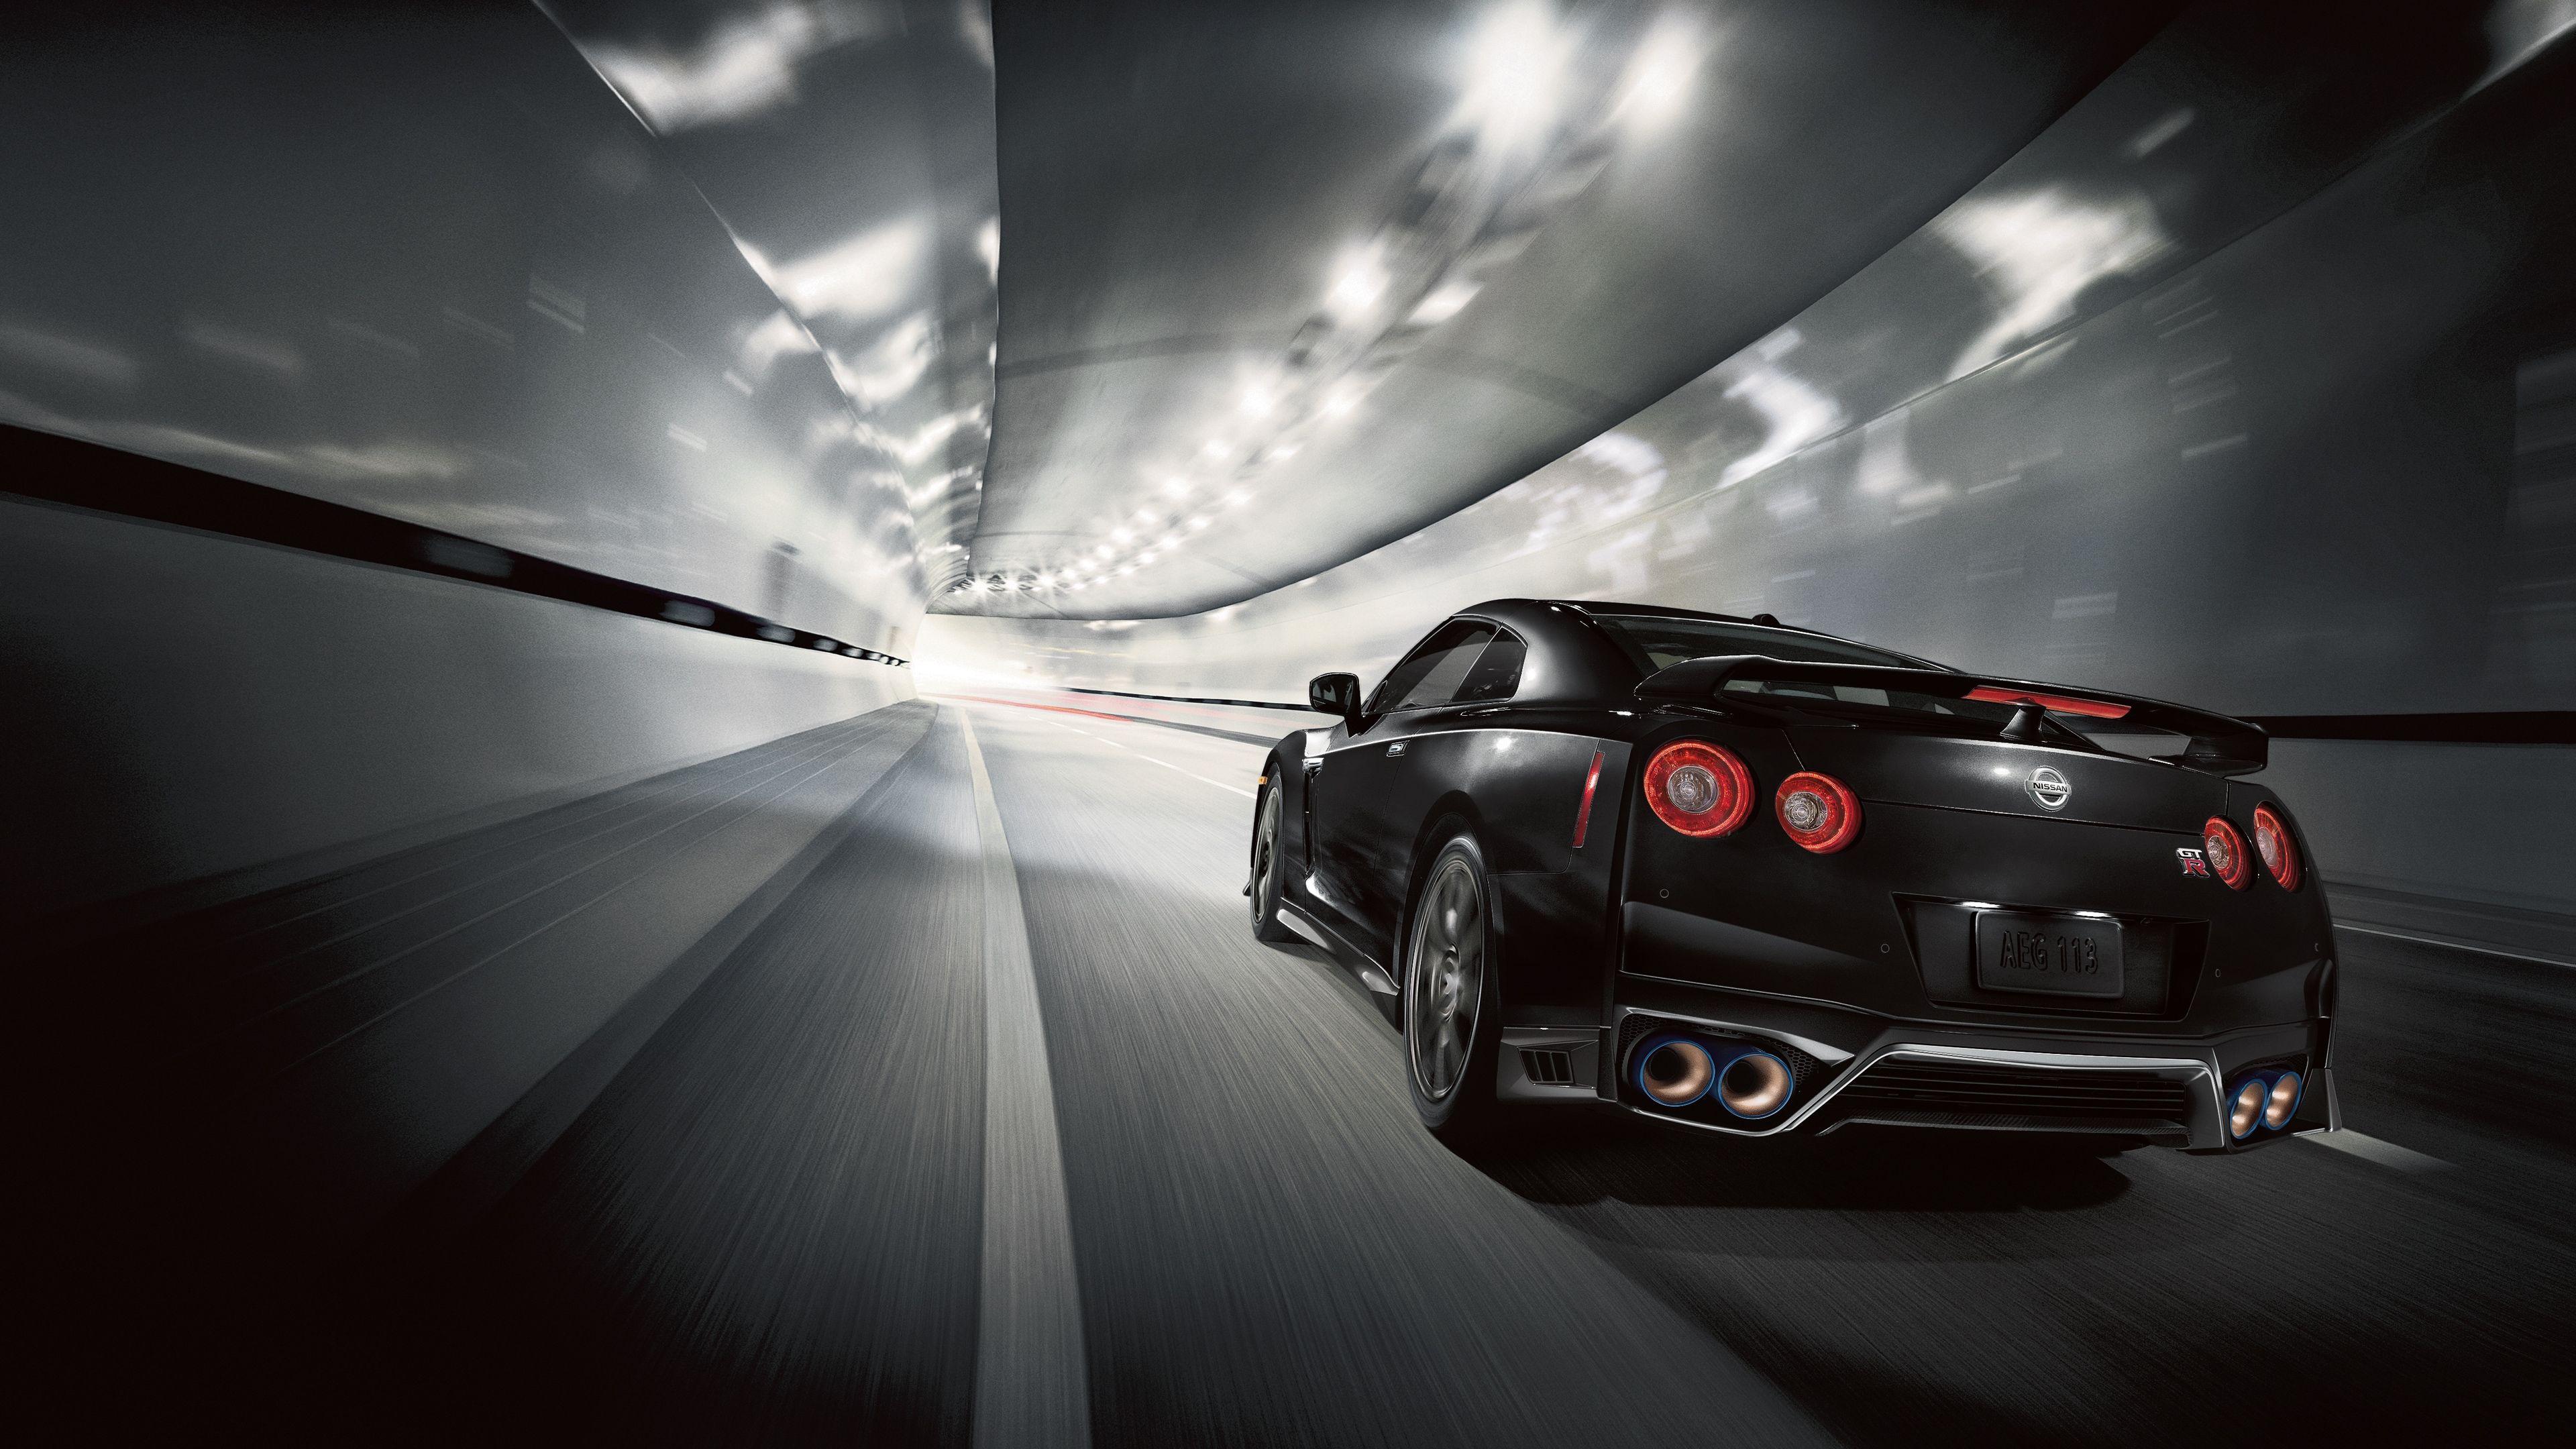 Black Nissan GTR Wallpapers Top Free Black Nissan GTR Backgrounds WallpaperAccess